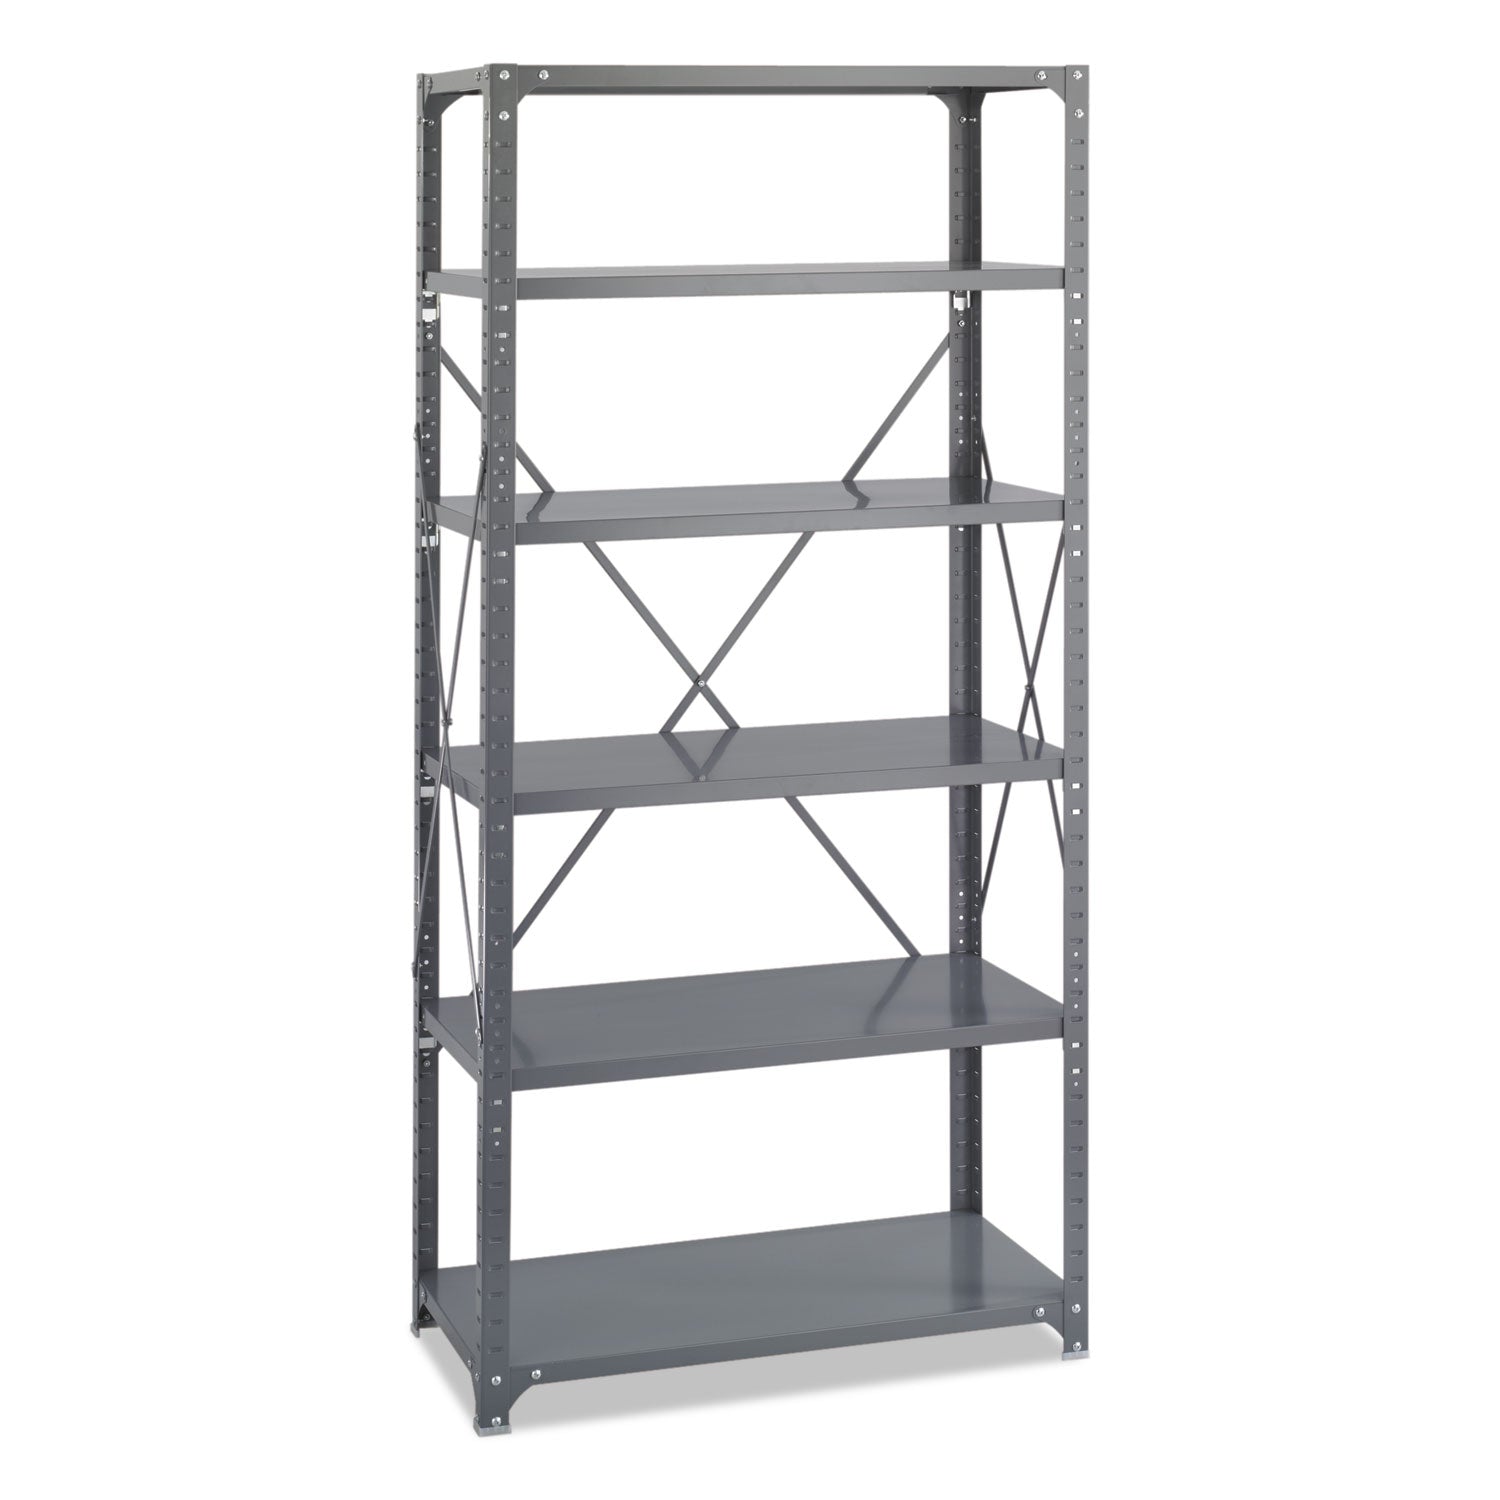 Commercial Steel Shelving Unit, Six-Shelf, 36w x 18d x 75h, Dark Gray - 